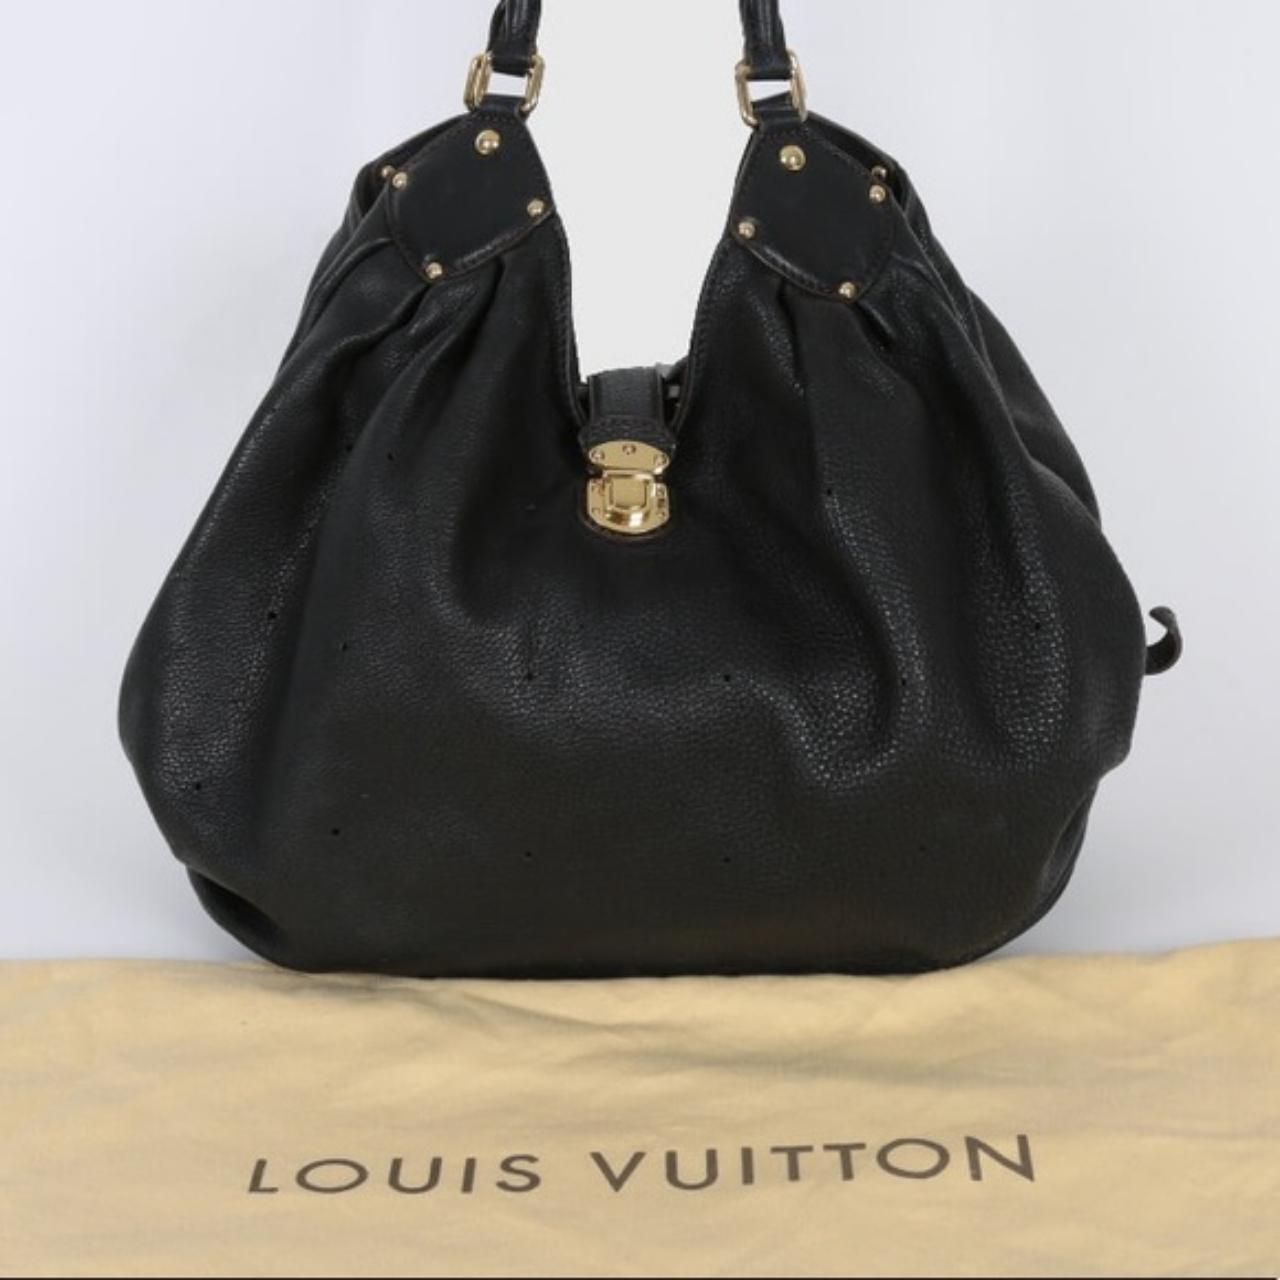 Louis Vuitton Mahina XL NEO L Minimal use. Purse has - Depop